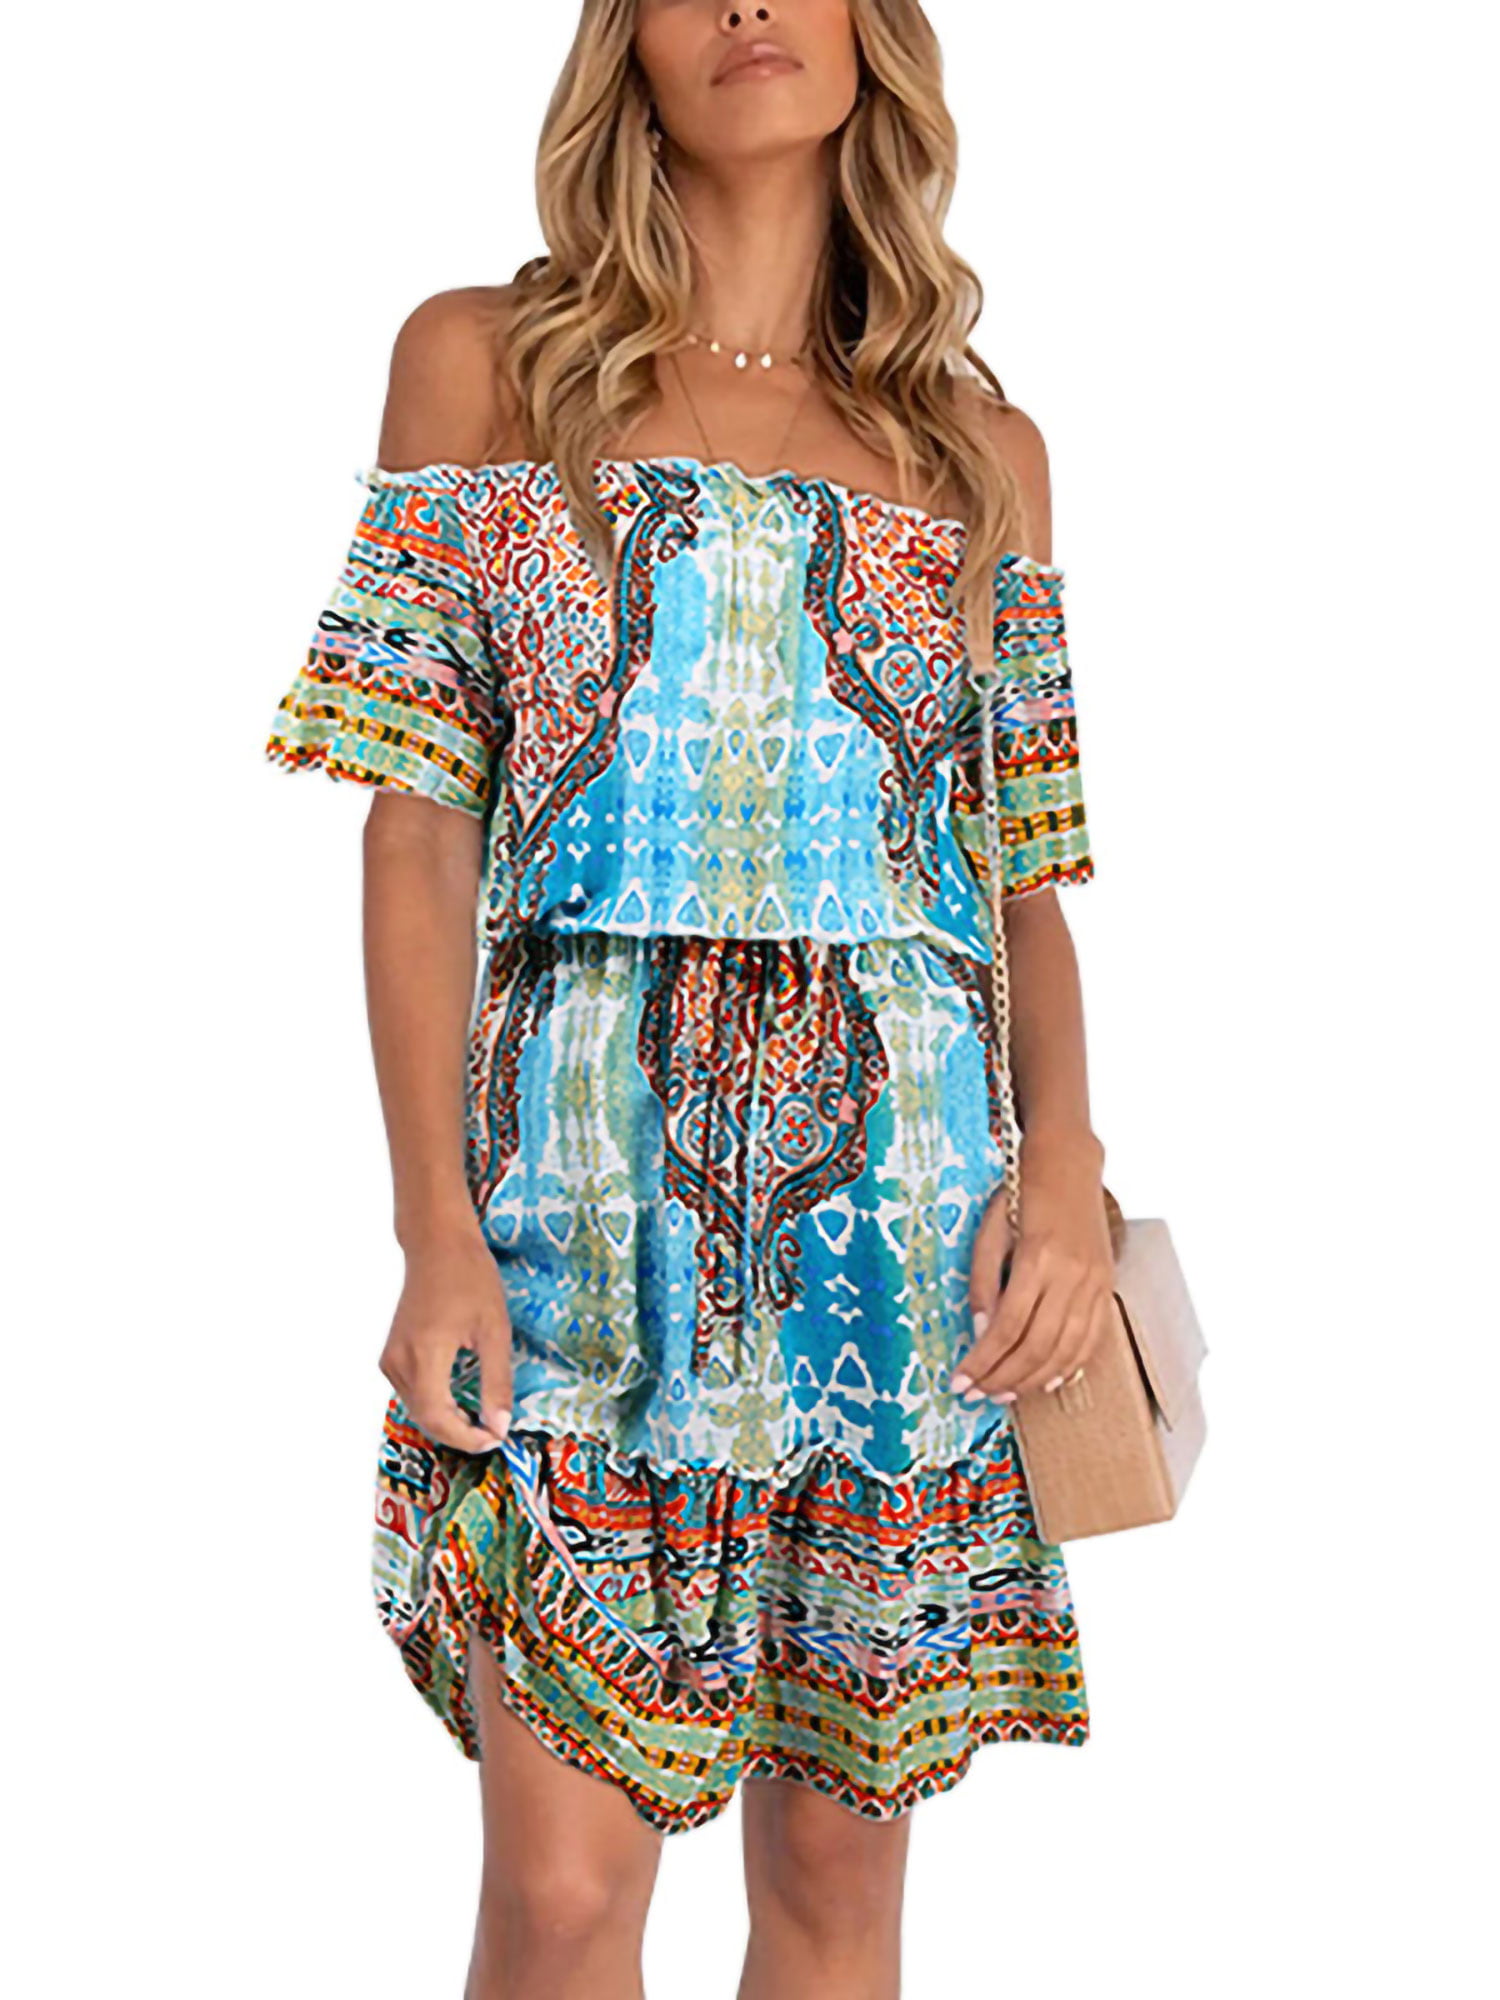 Umgee Summer Dress Sleeveless Floral Shift Lace Detail Cream Mix S M L 